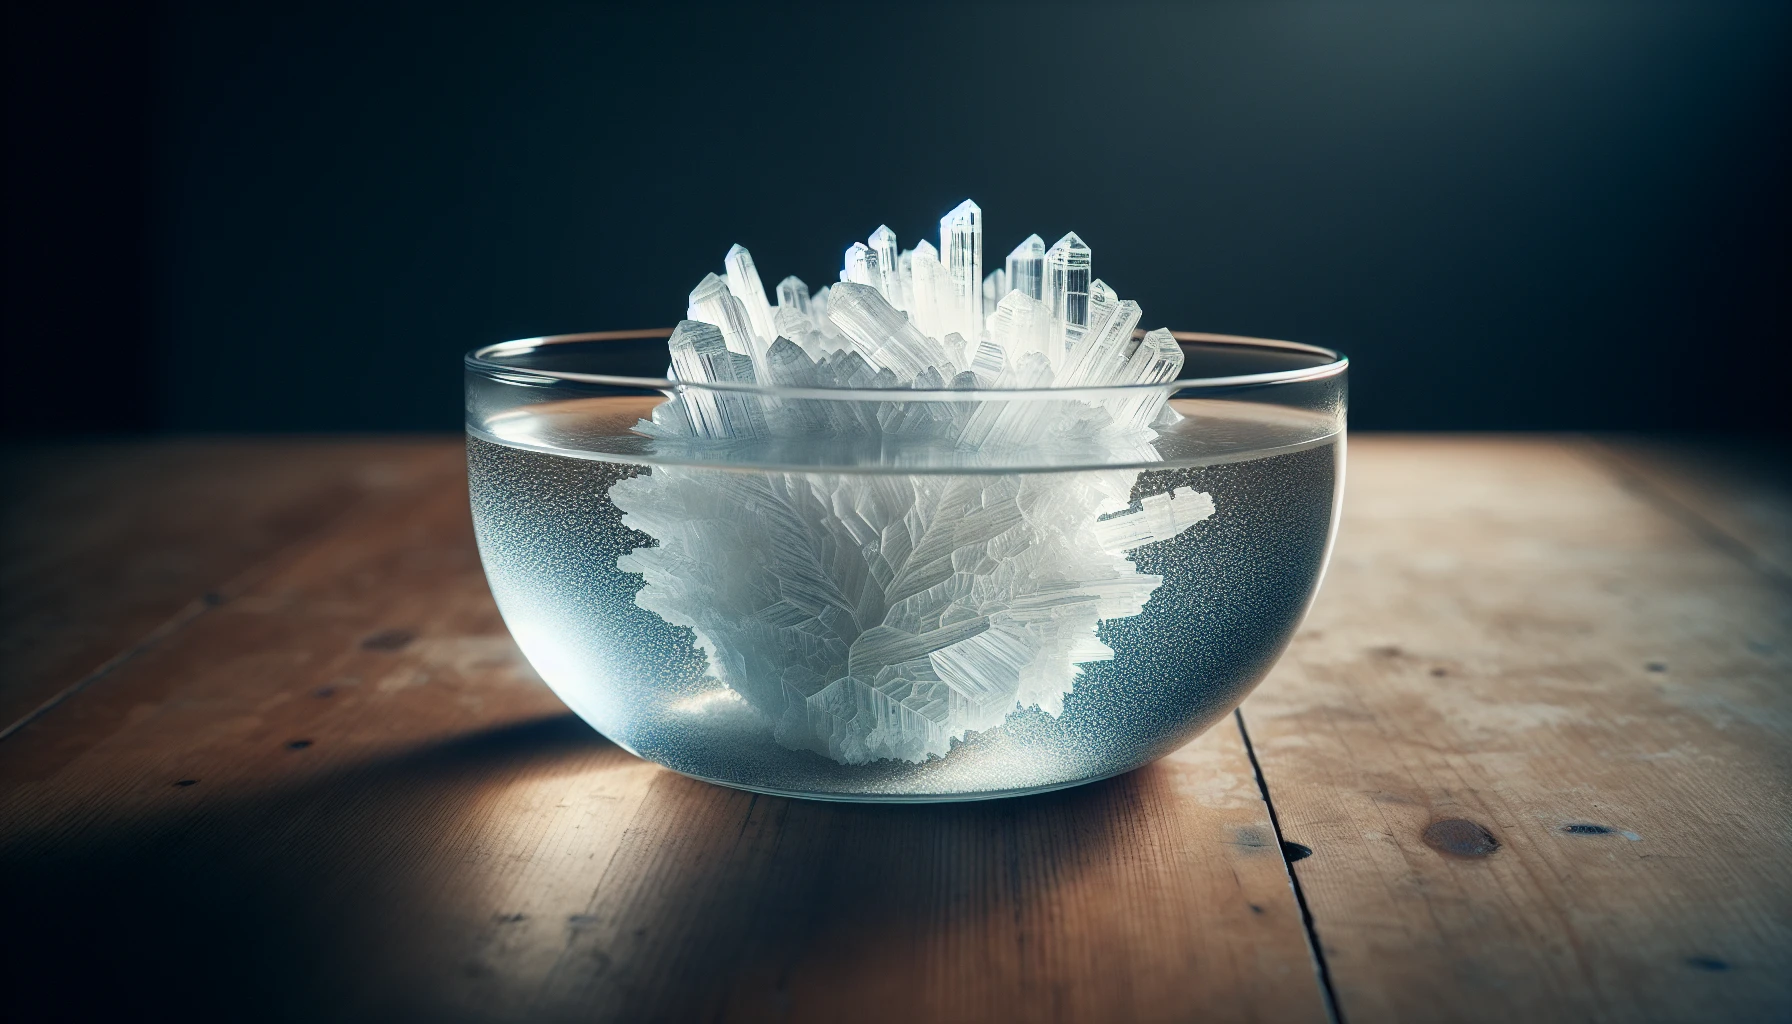 Selenite crystal submerged in water